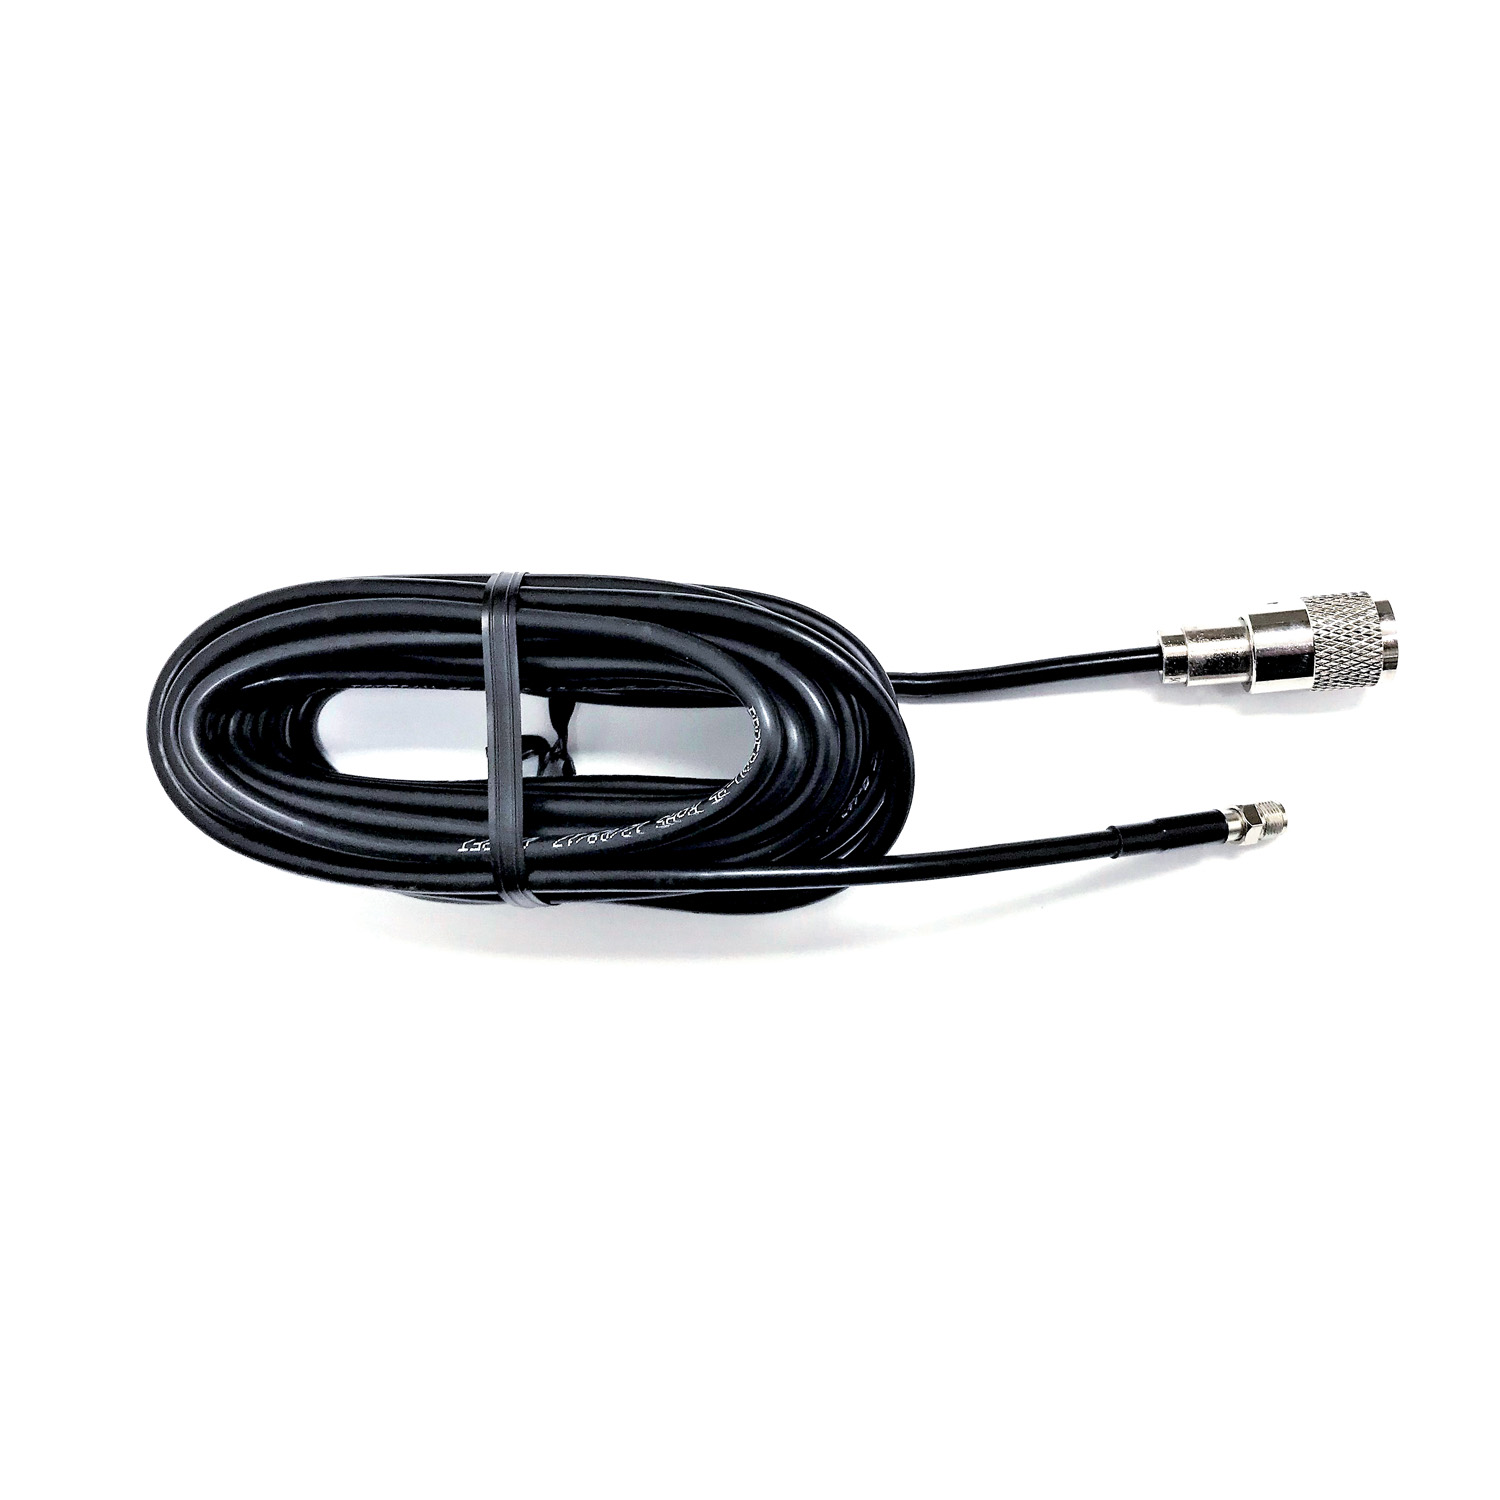 Procomm - P18XFME 18 Foot Single Lead Rg58Au Coax Cable With 1 Kalibur Pl259 & 1 Fme-F Connector